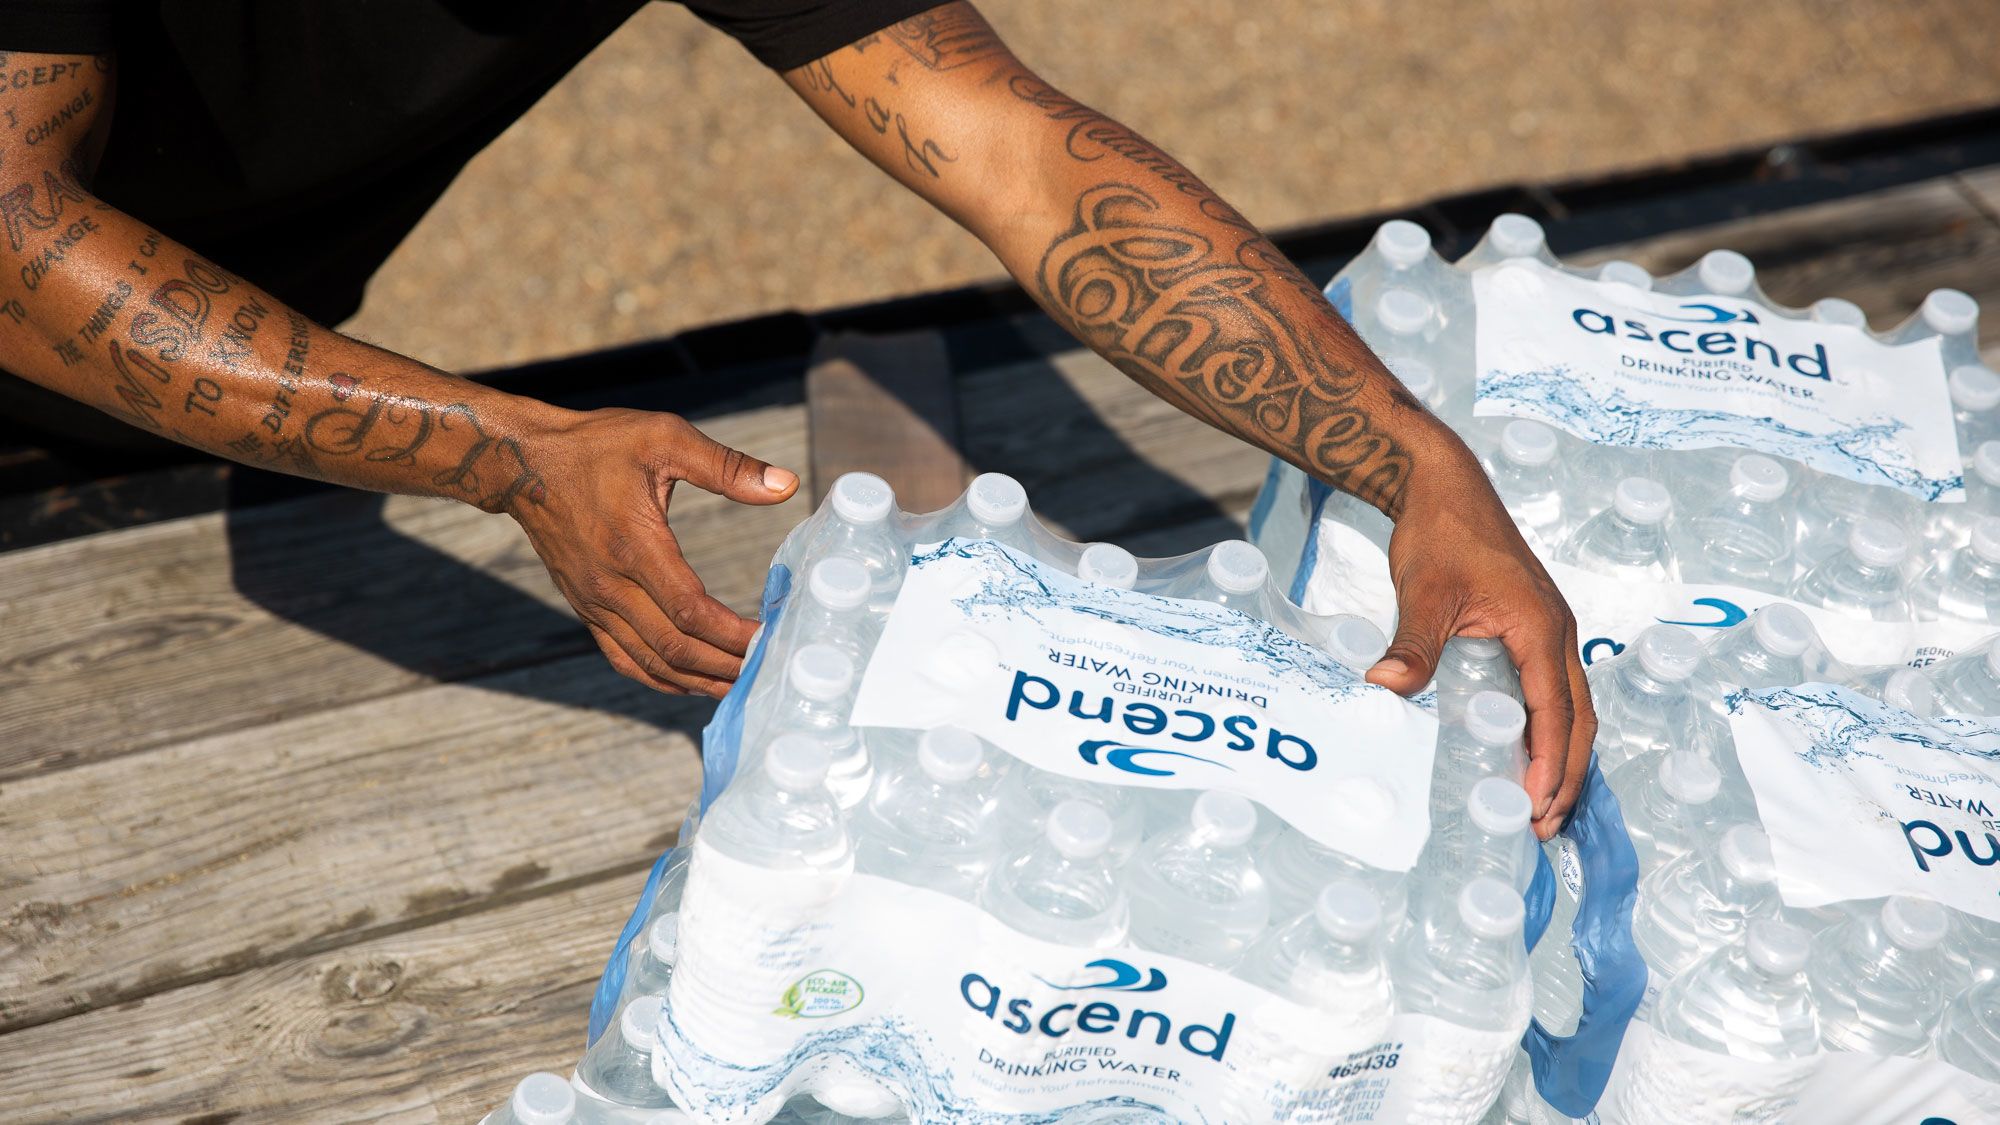 Please donate to the Jackson water crisis asap 🥺 #freewater #free #wa